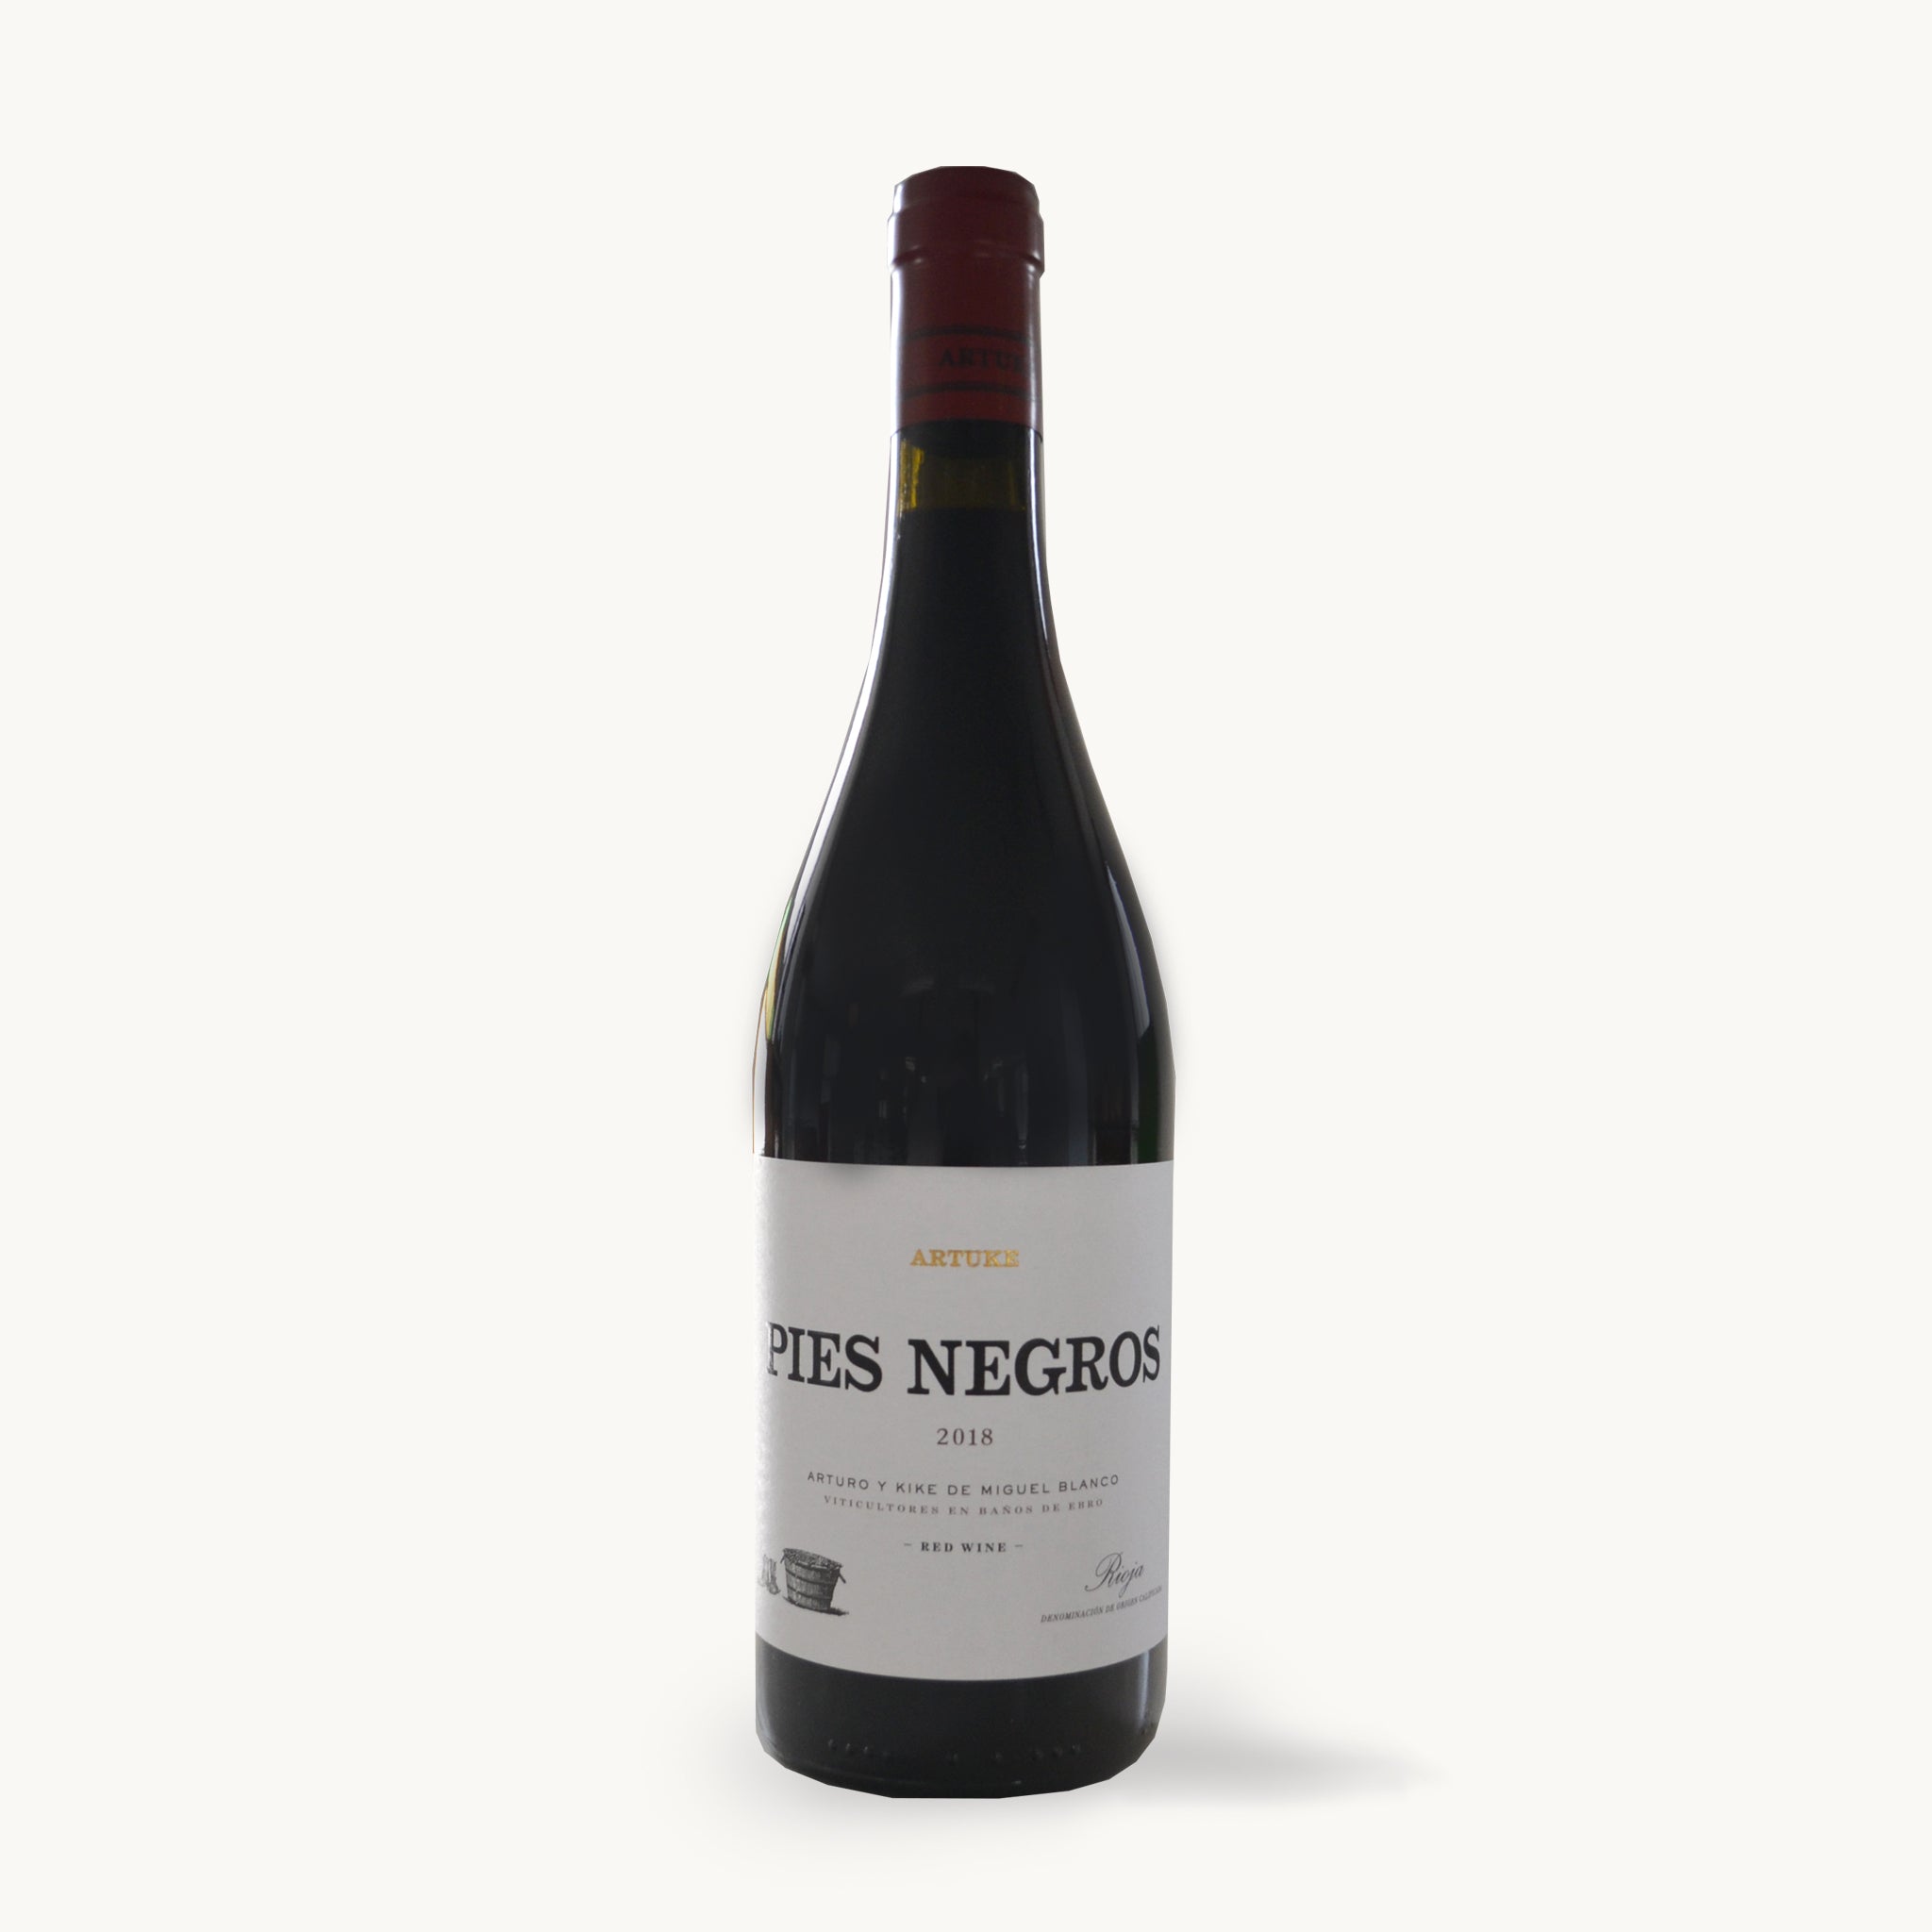 Pies Negros Rioja, Artuke, Red wine from Spain